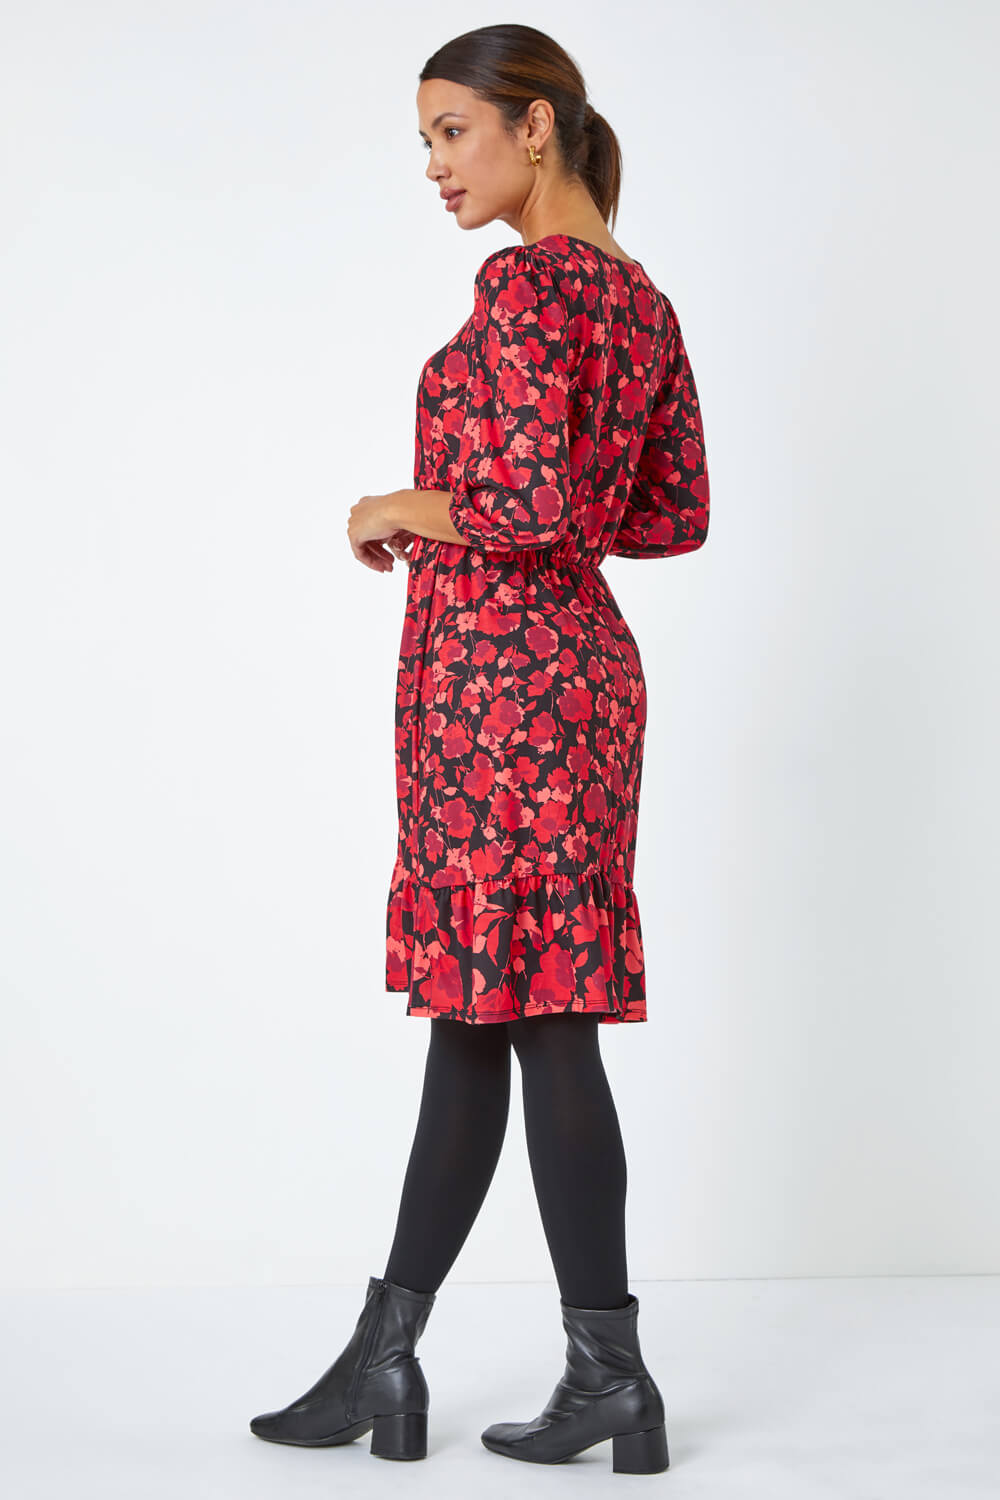 Red Floral Print Frill Hem Stretch Dress, Image 3 of 5